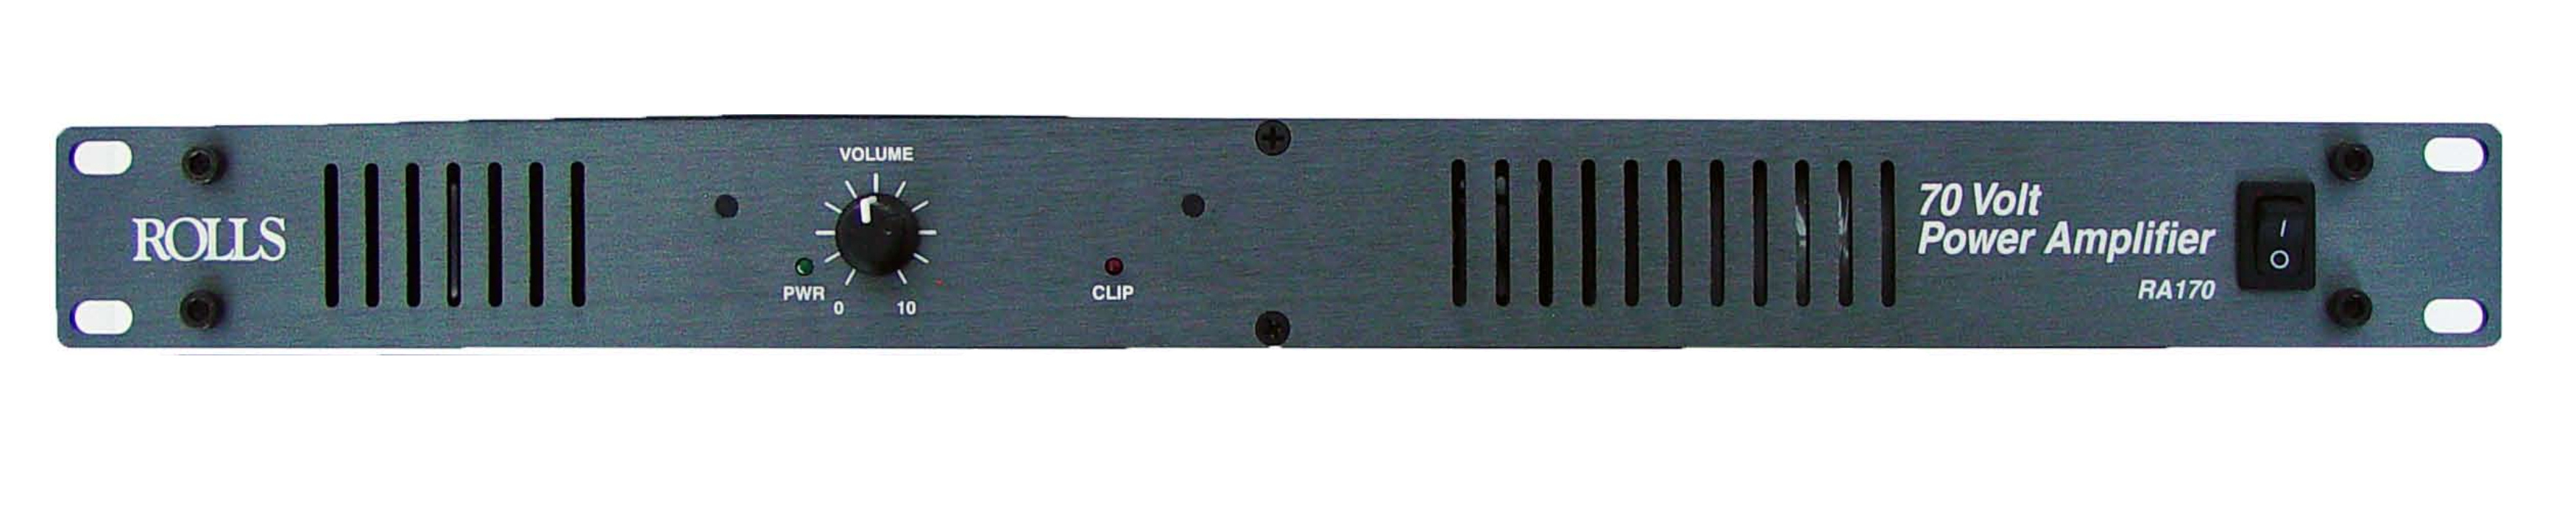 Photos - Amplifier Rolls RA170 Power , 70W, 70A, 1 Rack Unit 